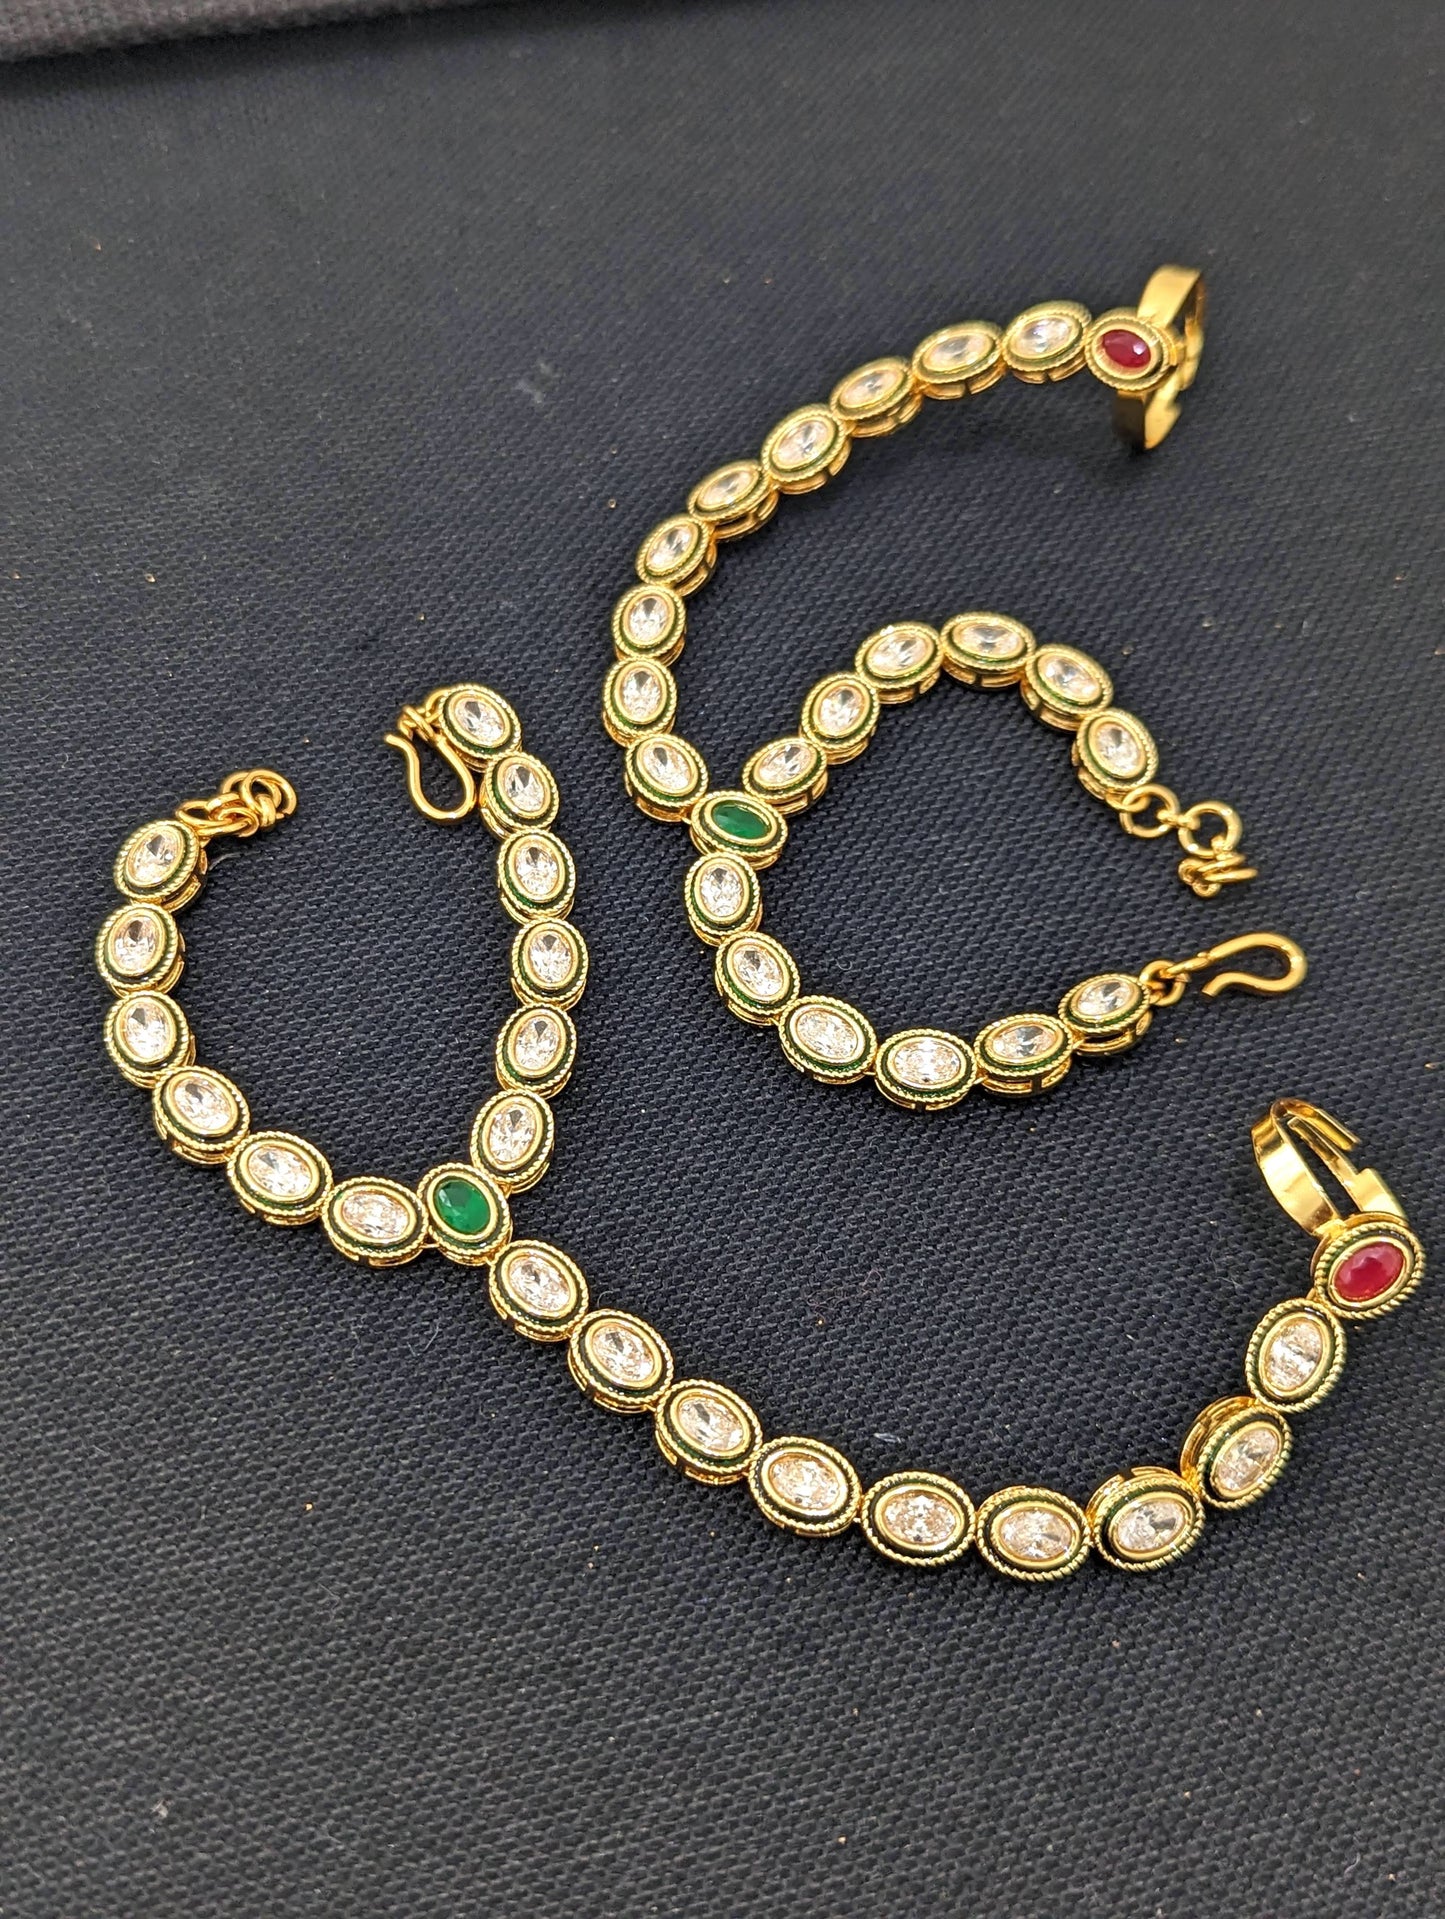 Polki Haath Phool / Bracelet Ring Combo / Ring Chain Bracelet / Indian Wedding Jewelry - D3